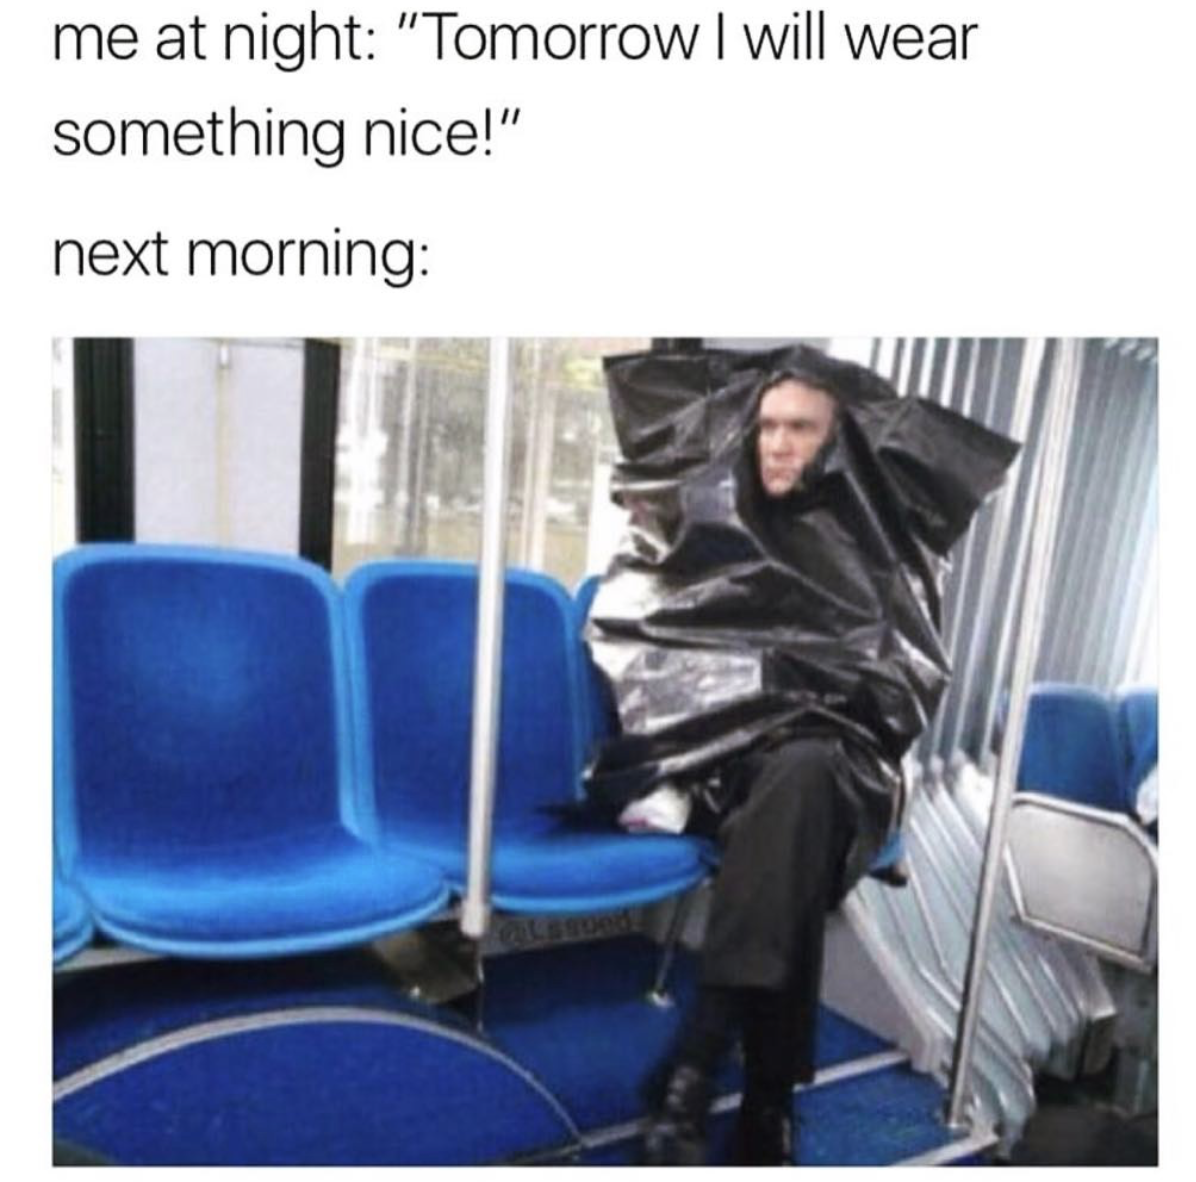 memes - wearing a trash bag - me at night "Tomorrow I will wear something nice!" next morning